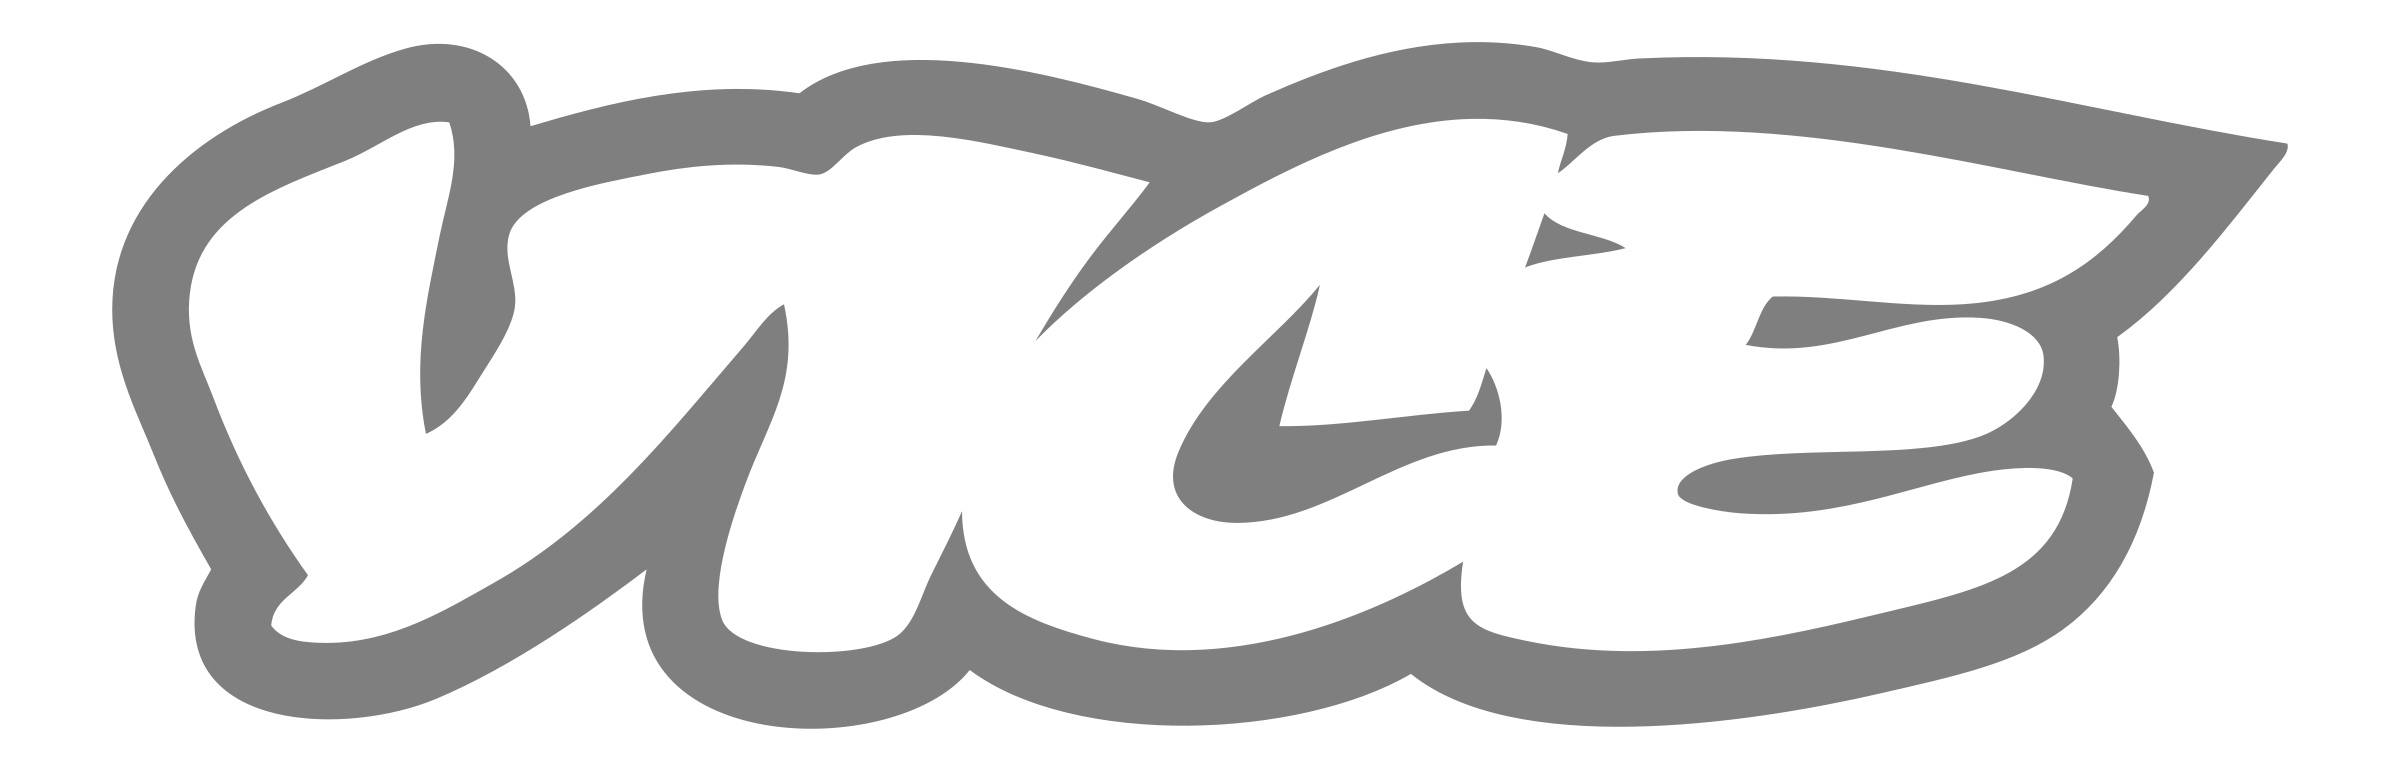 vice-logo-transparent 1